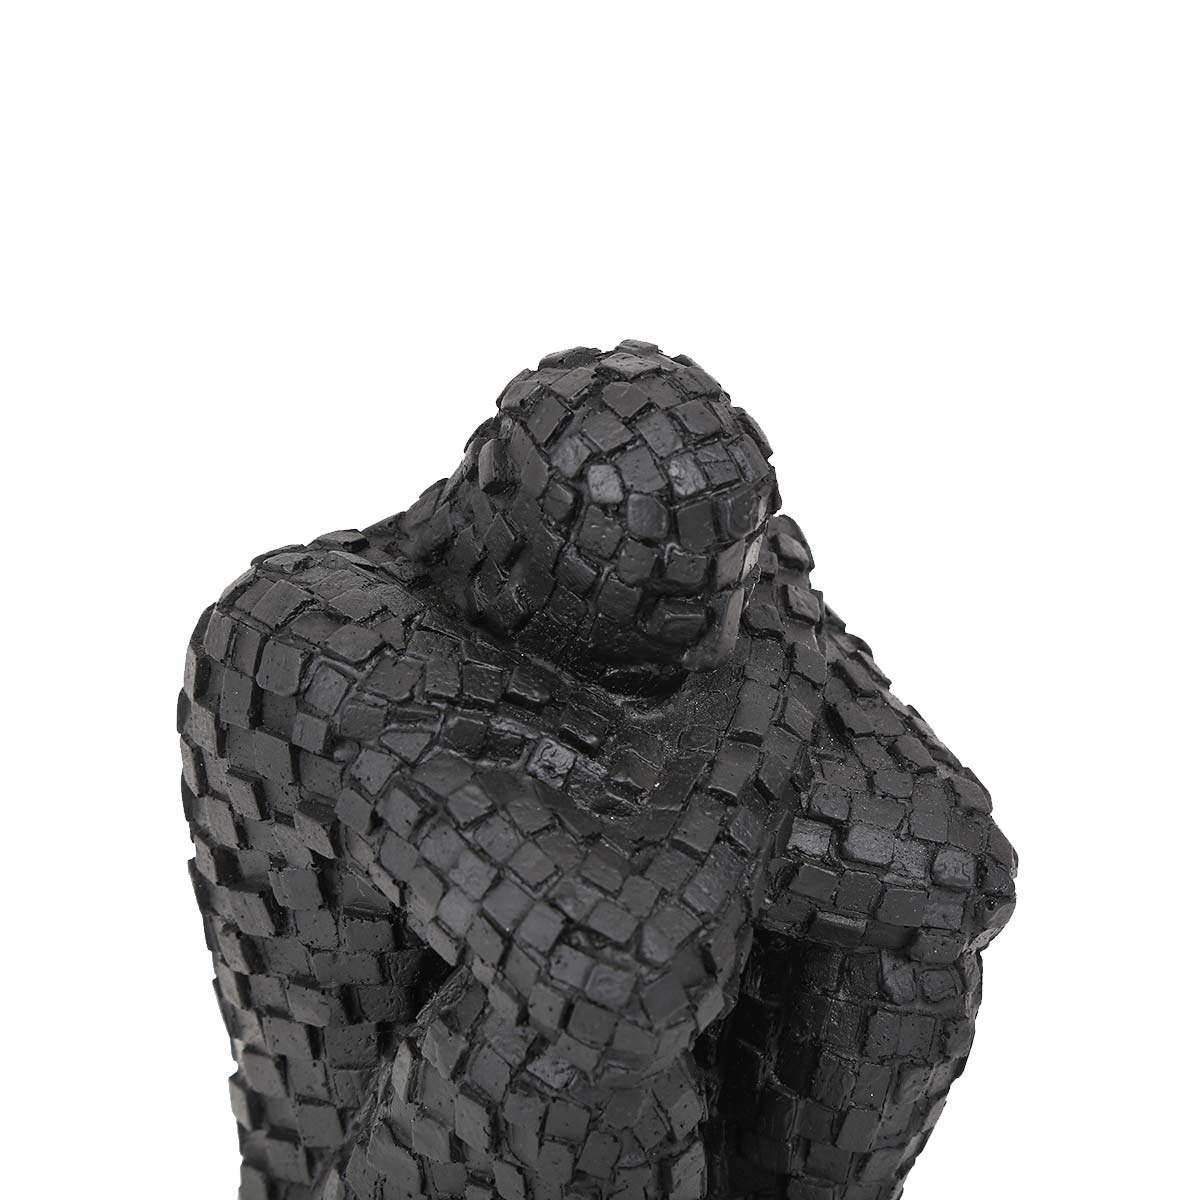 Thinking man sculpture - Black